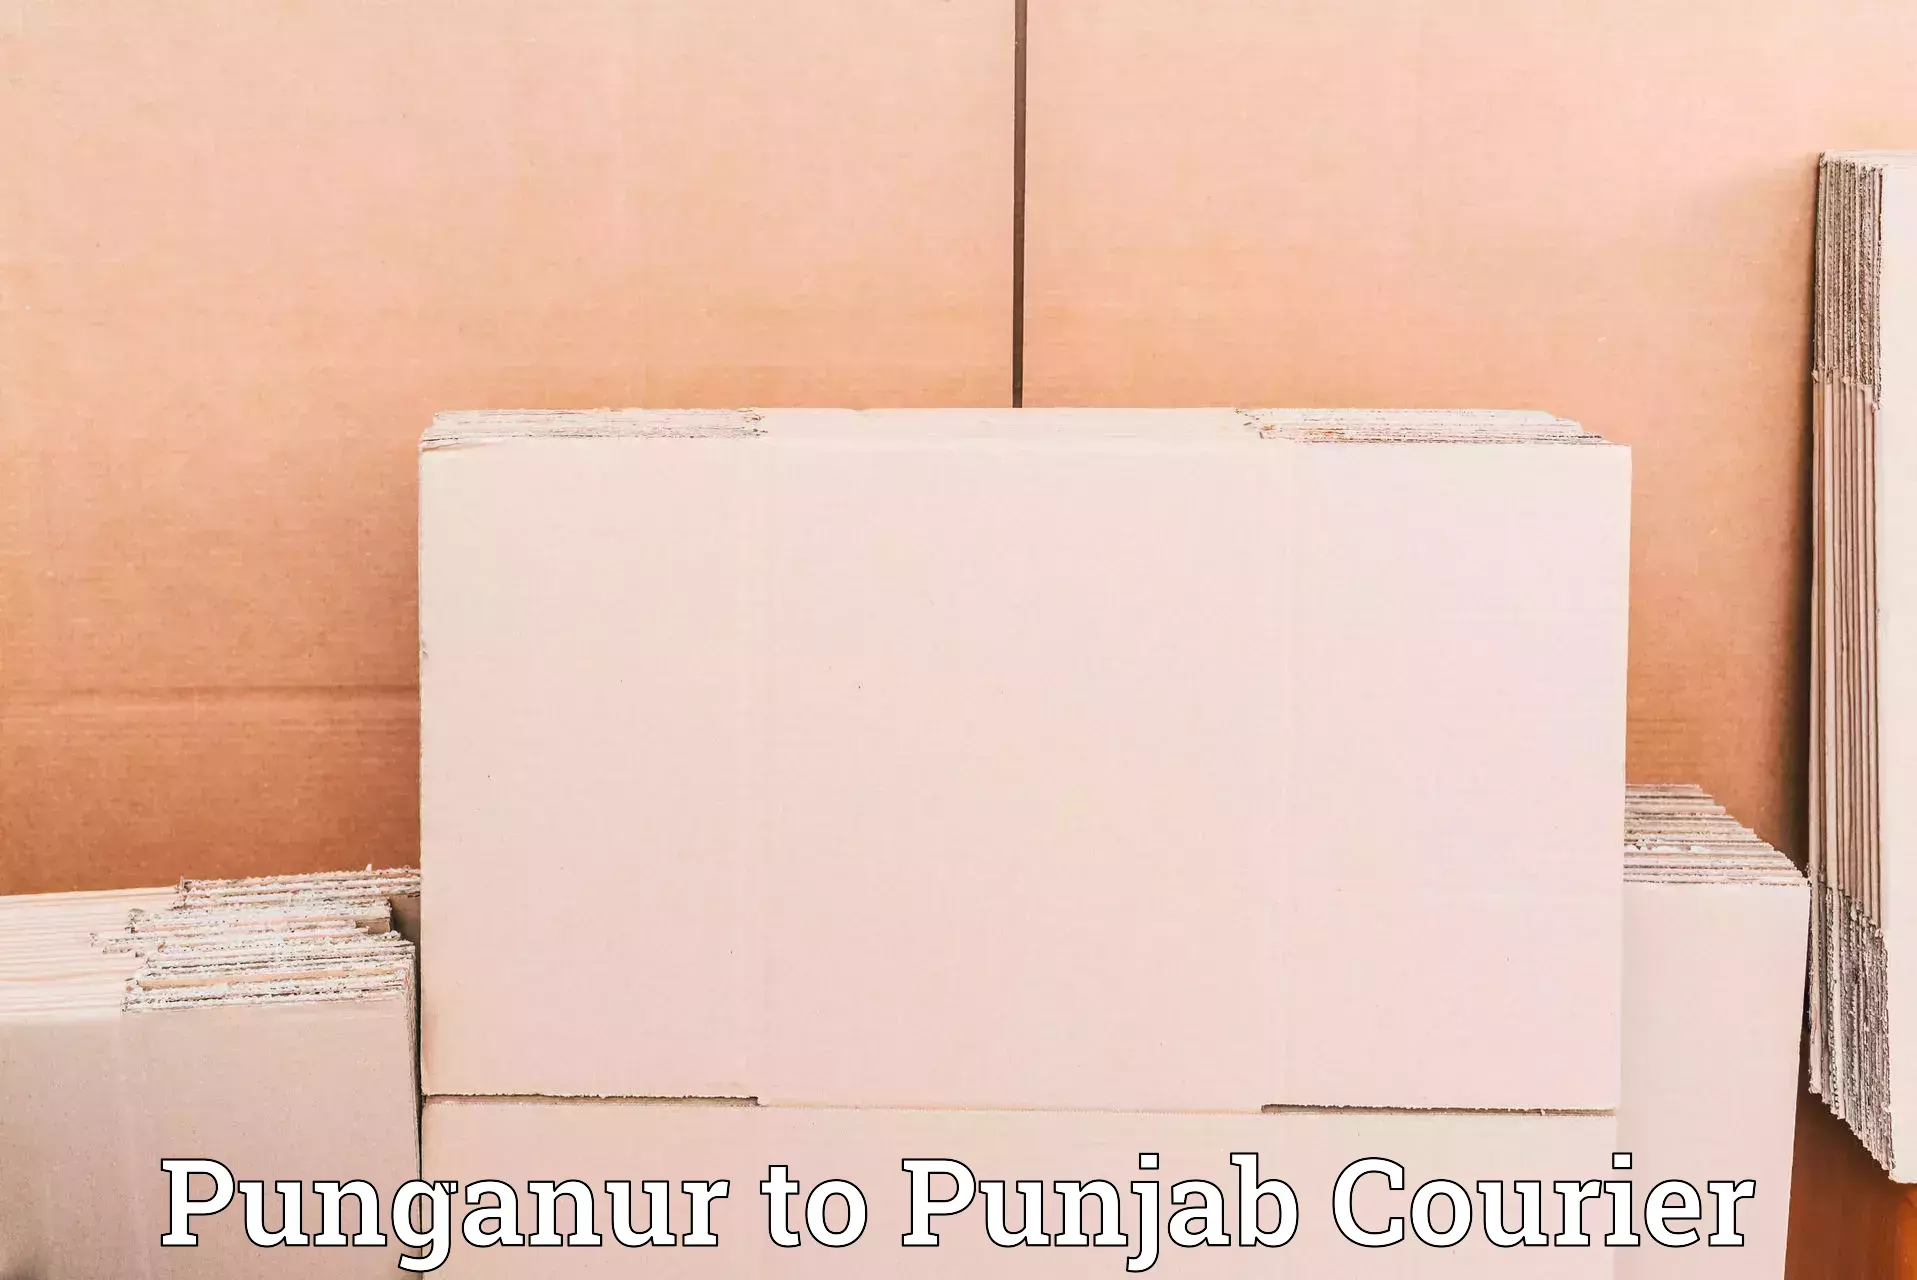 Global courier networks Punganur to Punjab